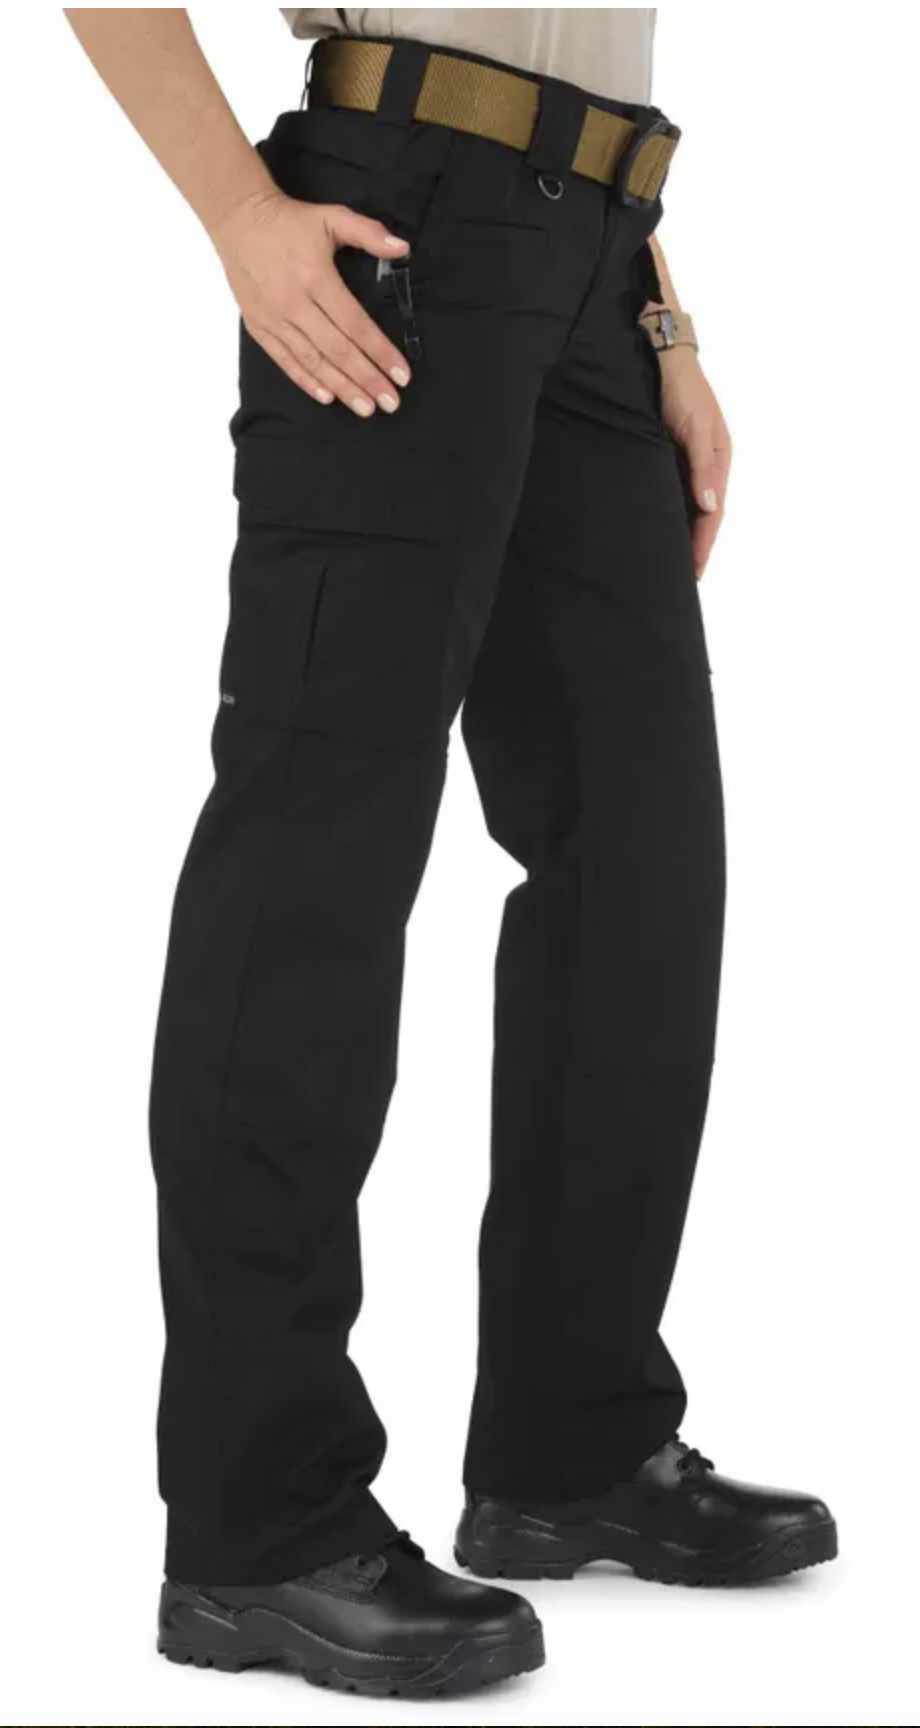 5.11 - Women's TACLITE® Pro Ripstop Pant - Black (019) - Regular